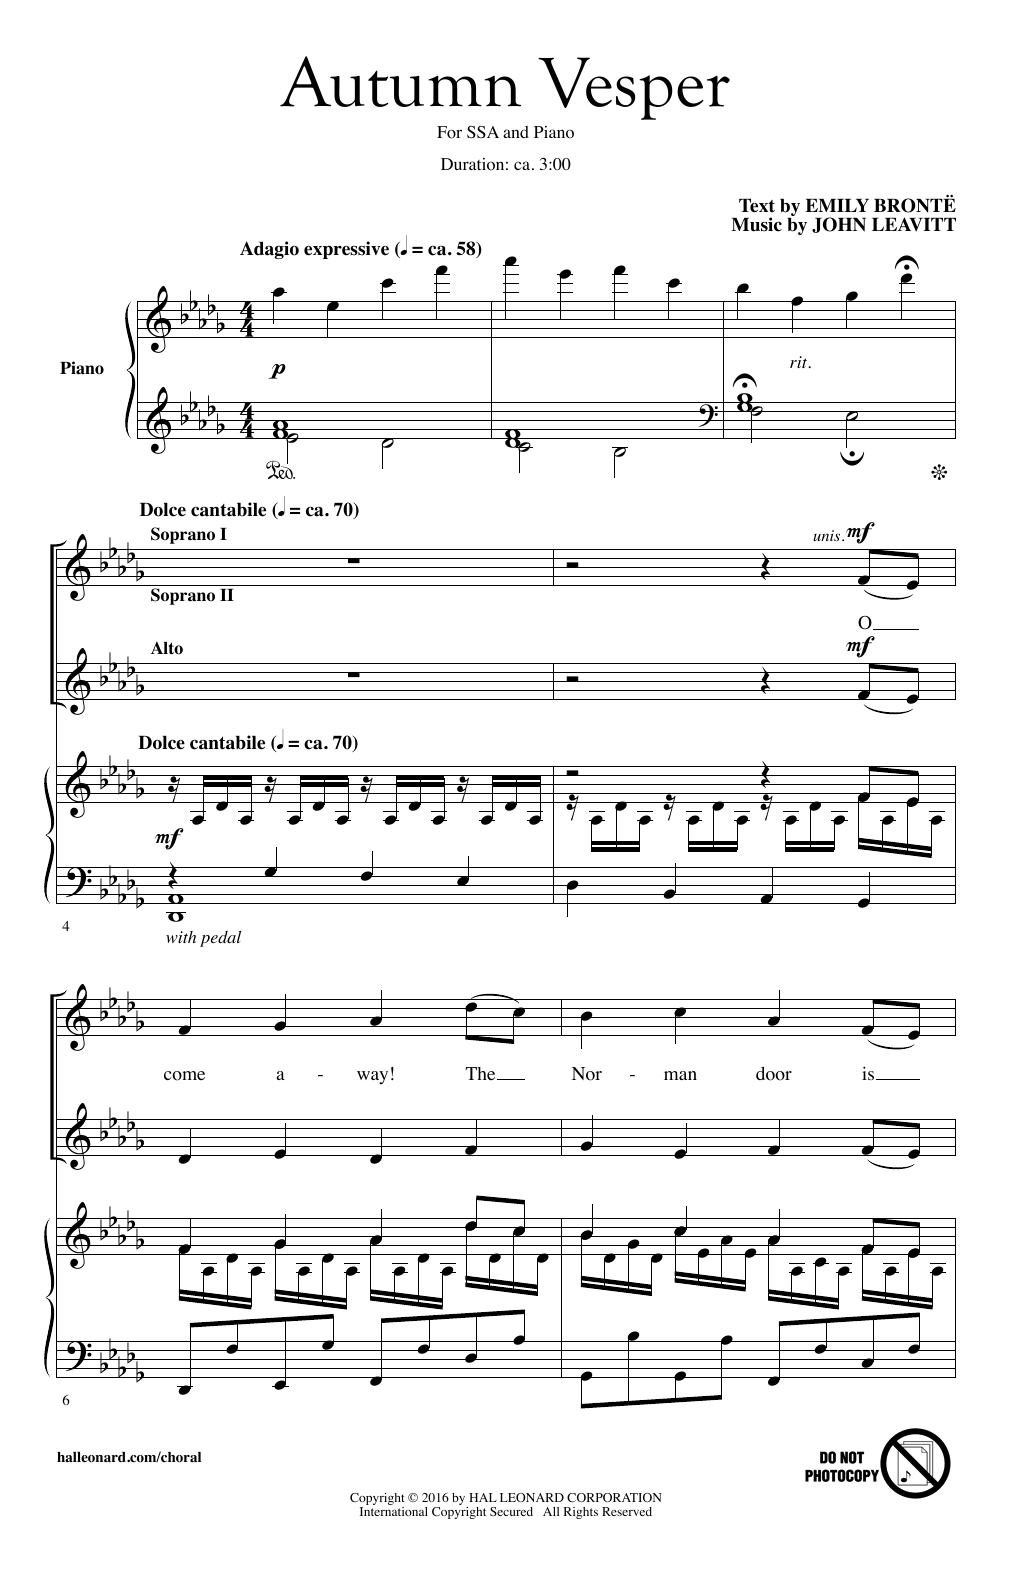 Download John Leavitt Autumn Vesper Sheet Music and learn how to play SSA PDF digital score in minutes